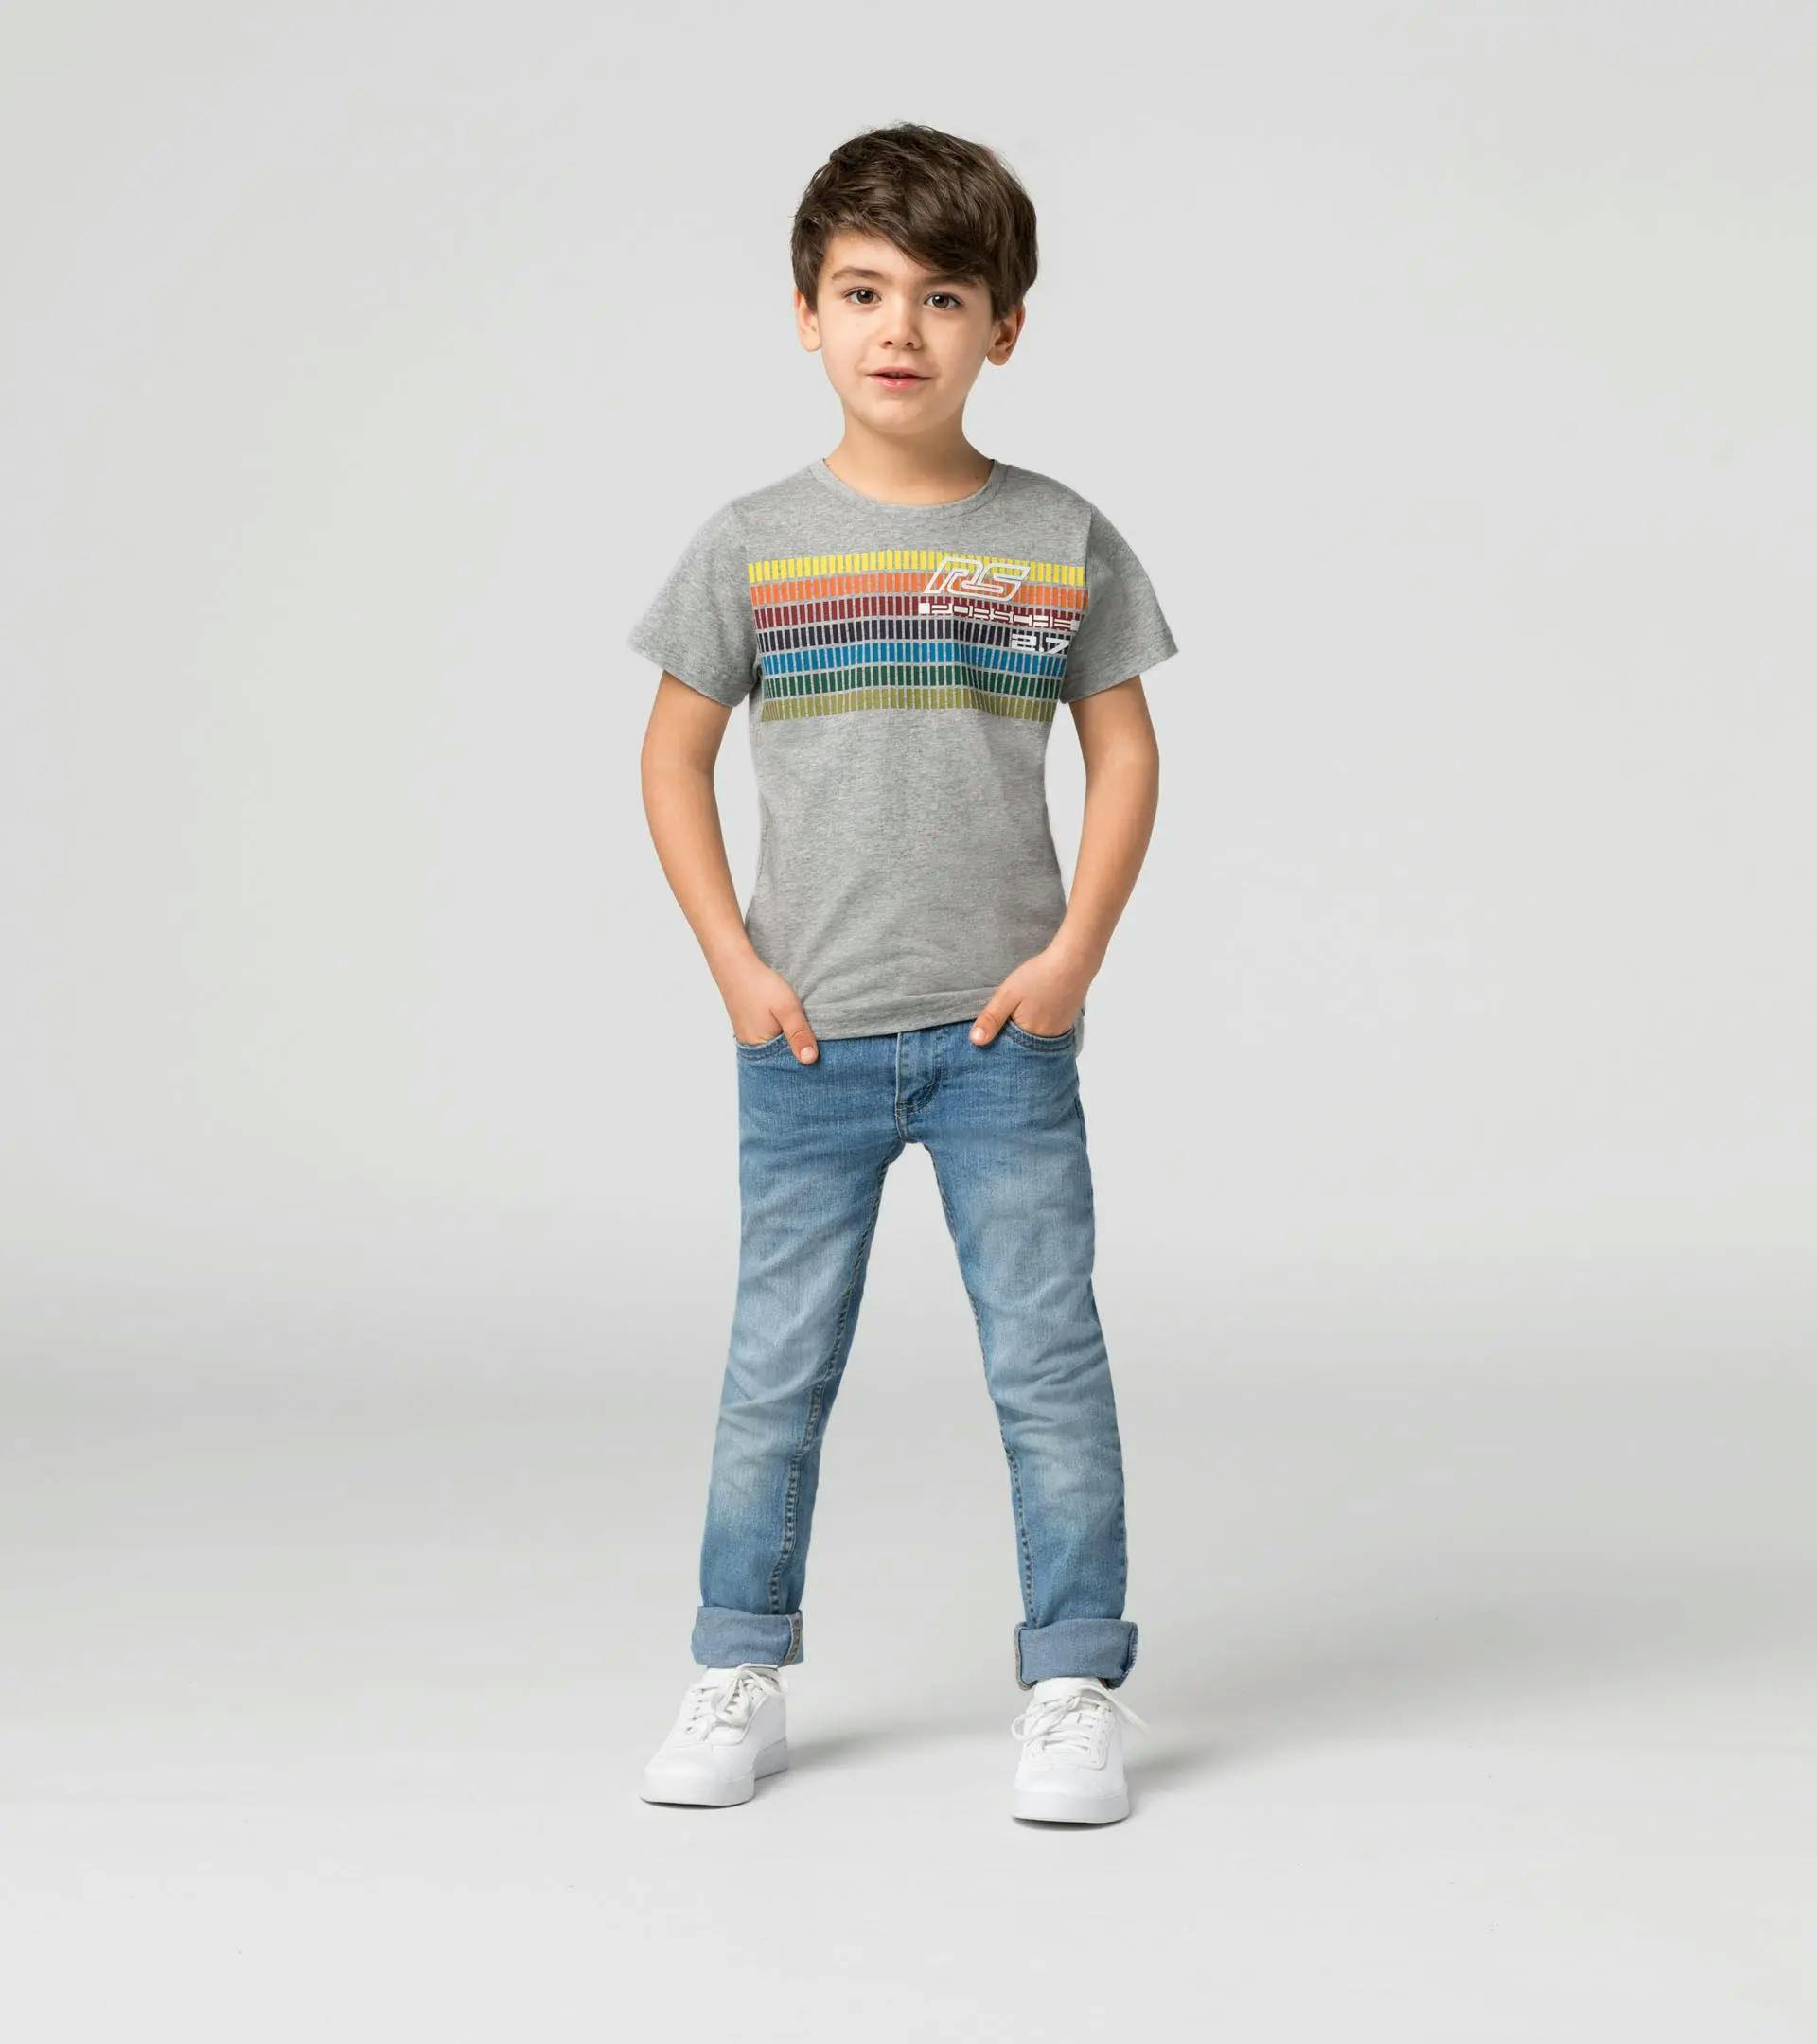 Kids T-Shirt – RS 2.7 6